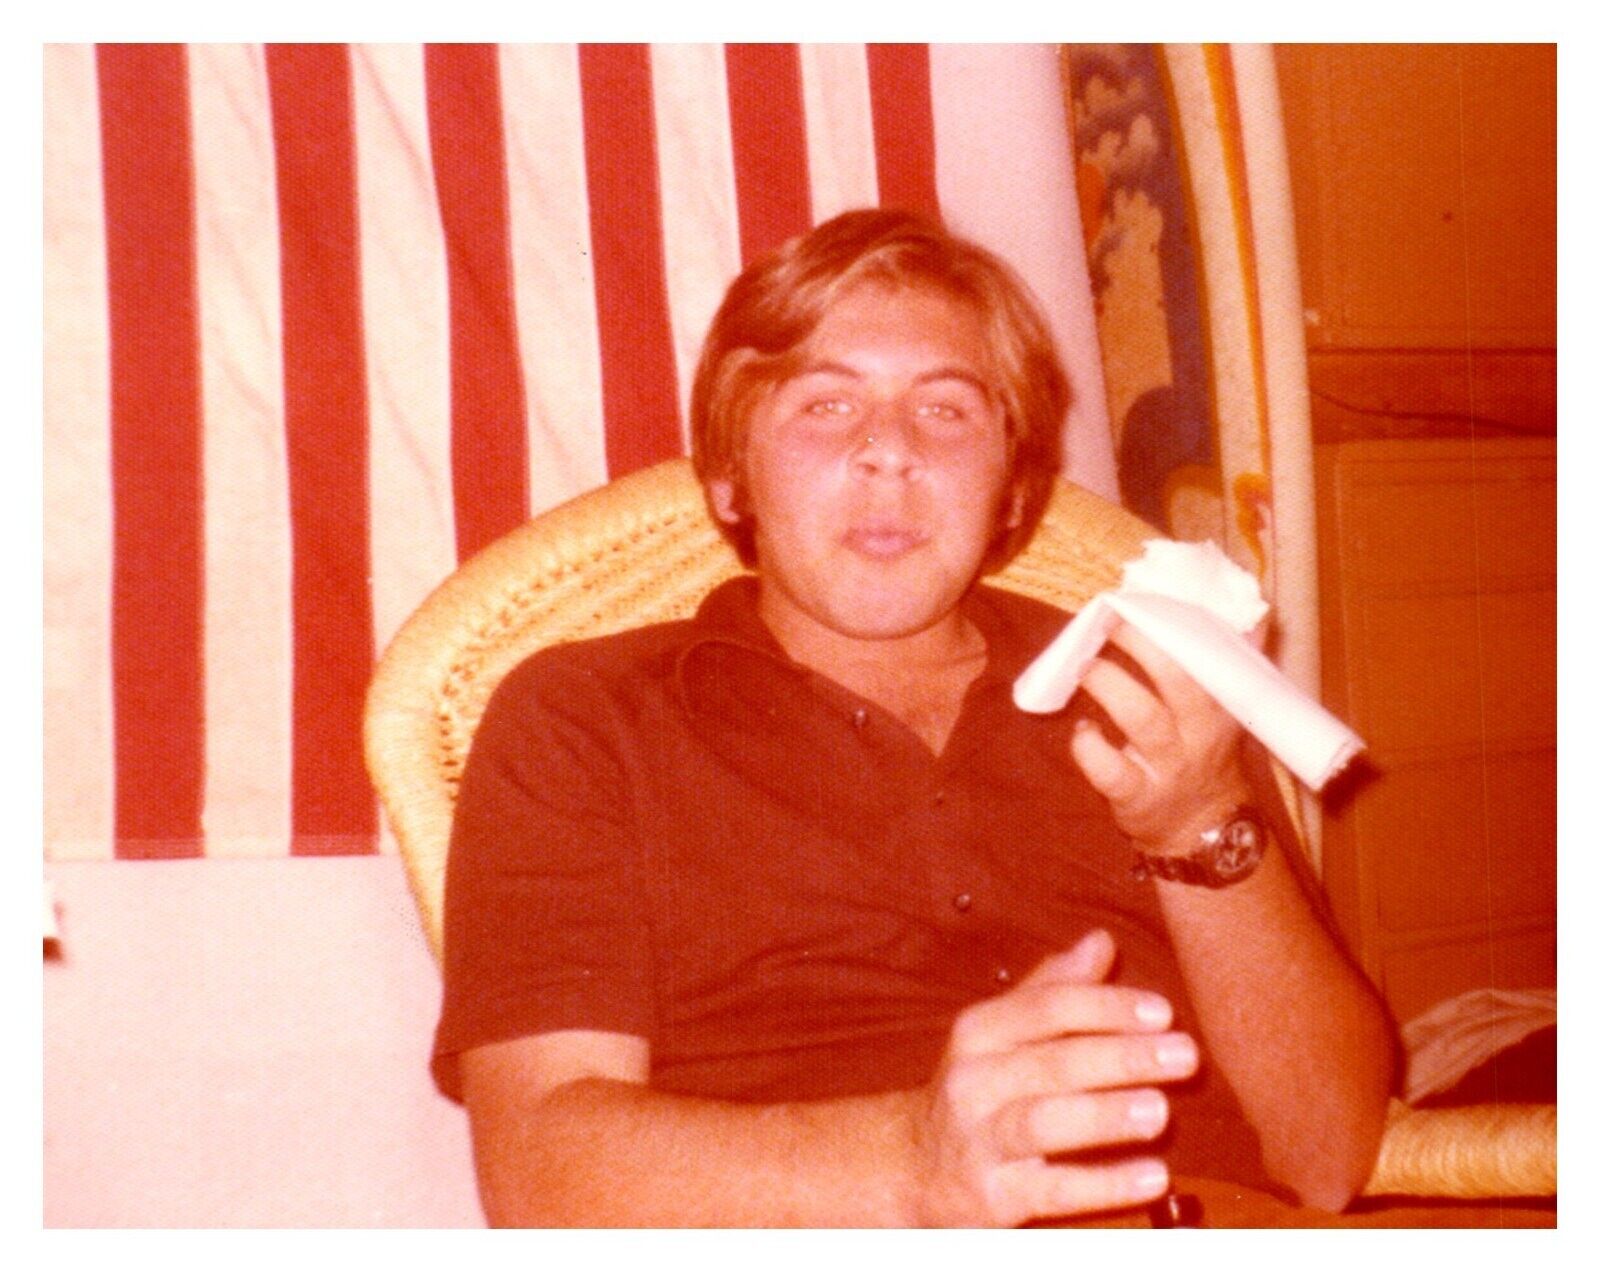 1970s American Teenager Republican American Flag Vintage Snapshot Photo Found